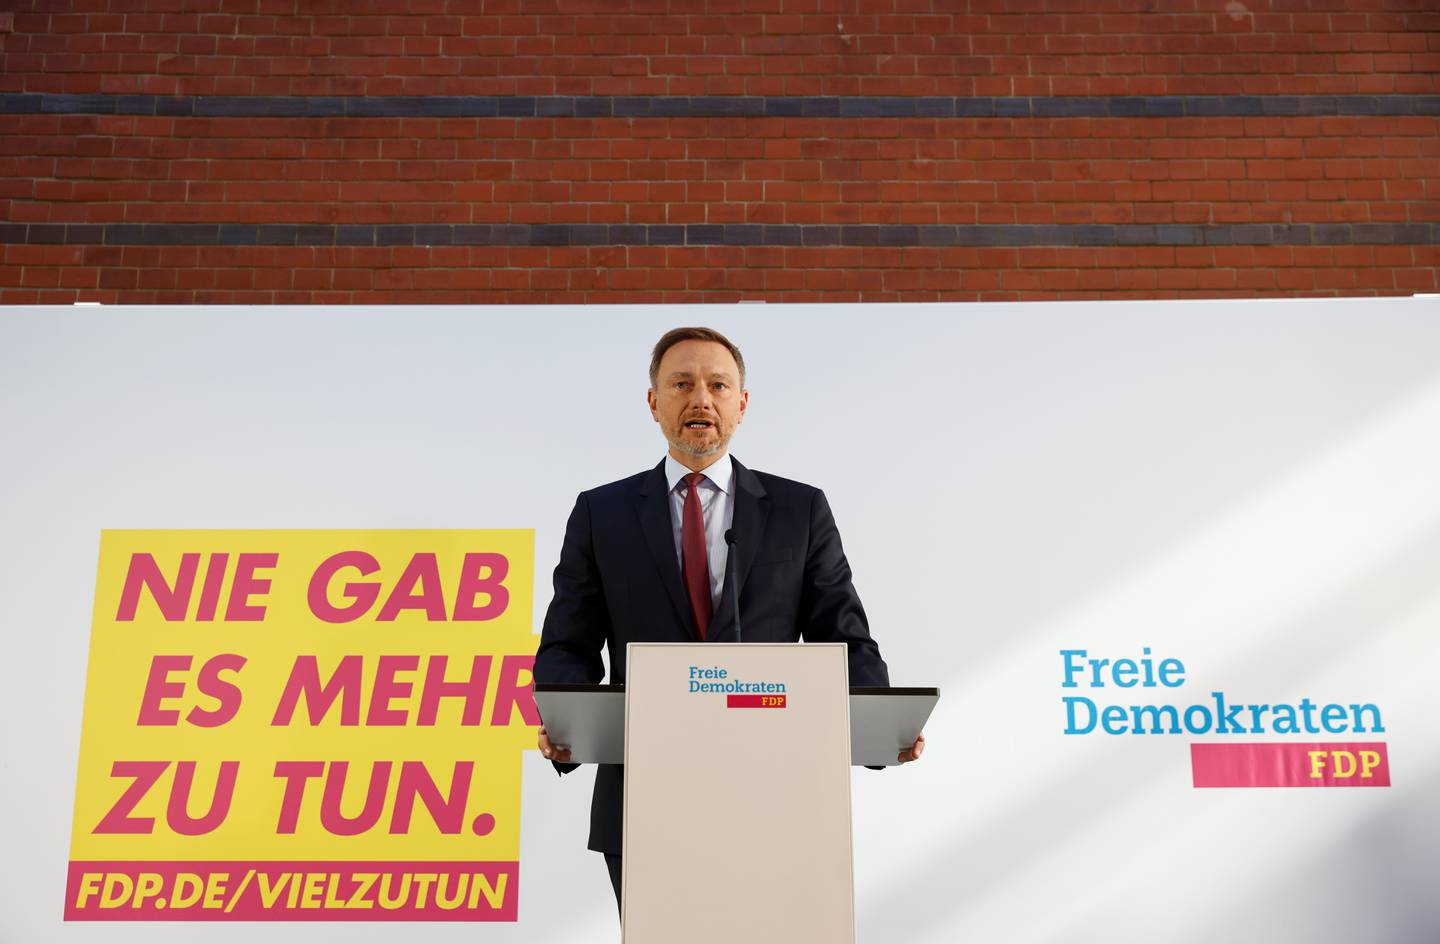 FDP-leder Christian Lindner møtte pressen onsdag.